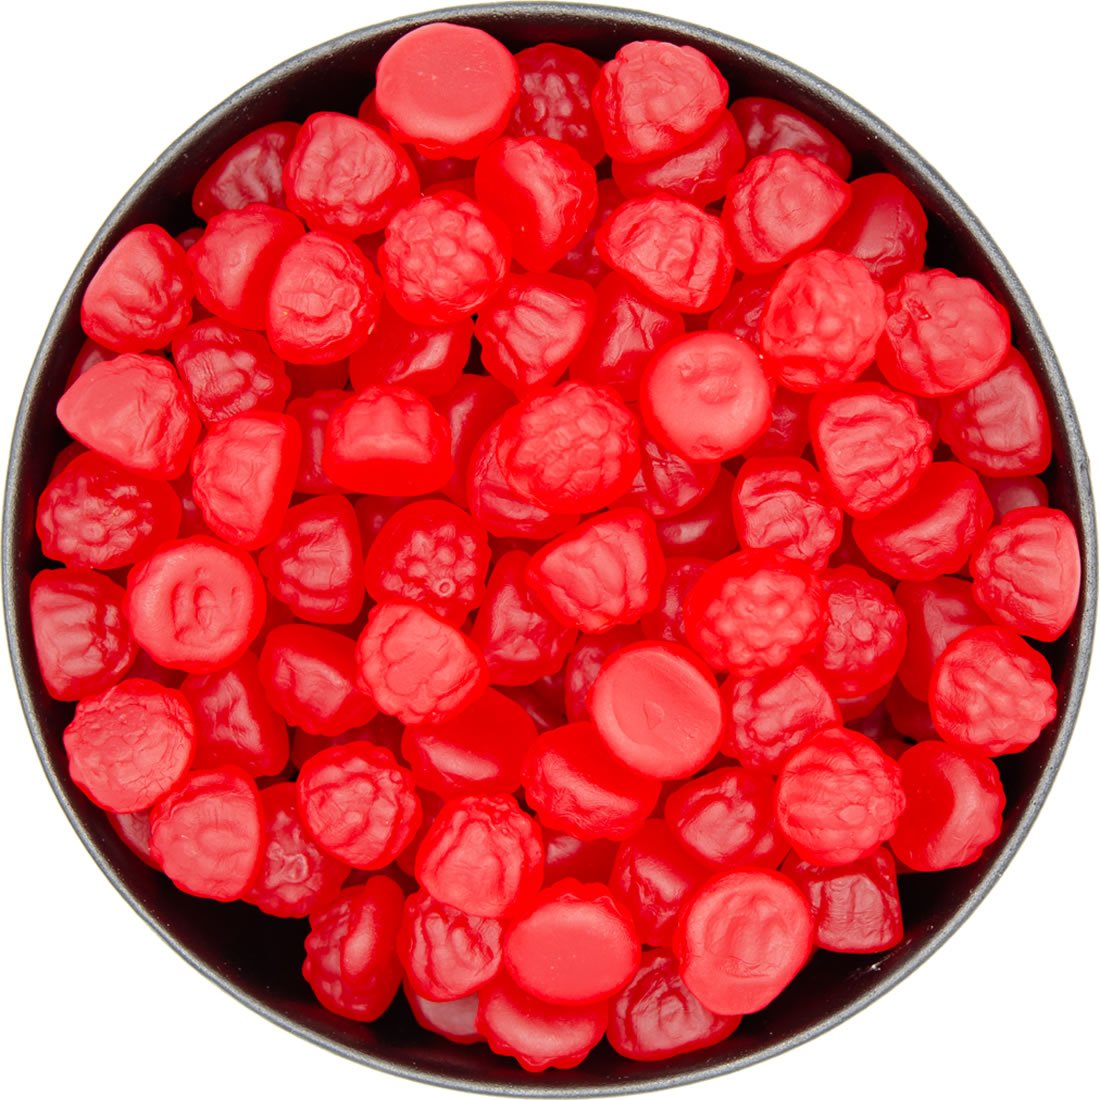 Mini Red Berries (Swedish Berries) 200g